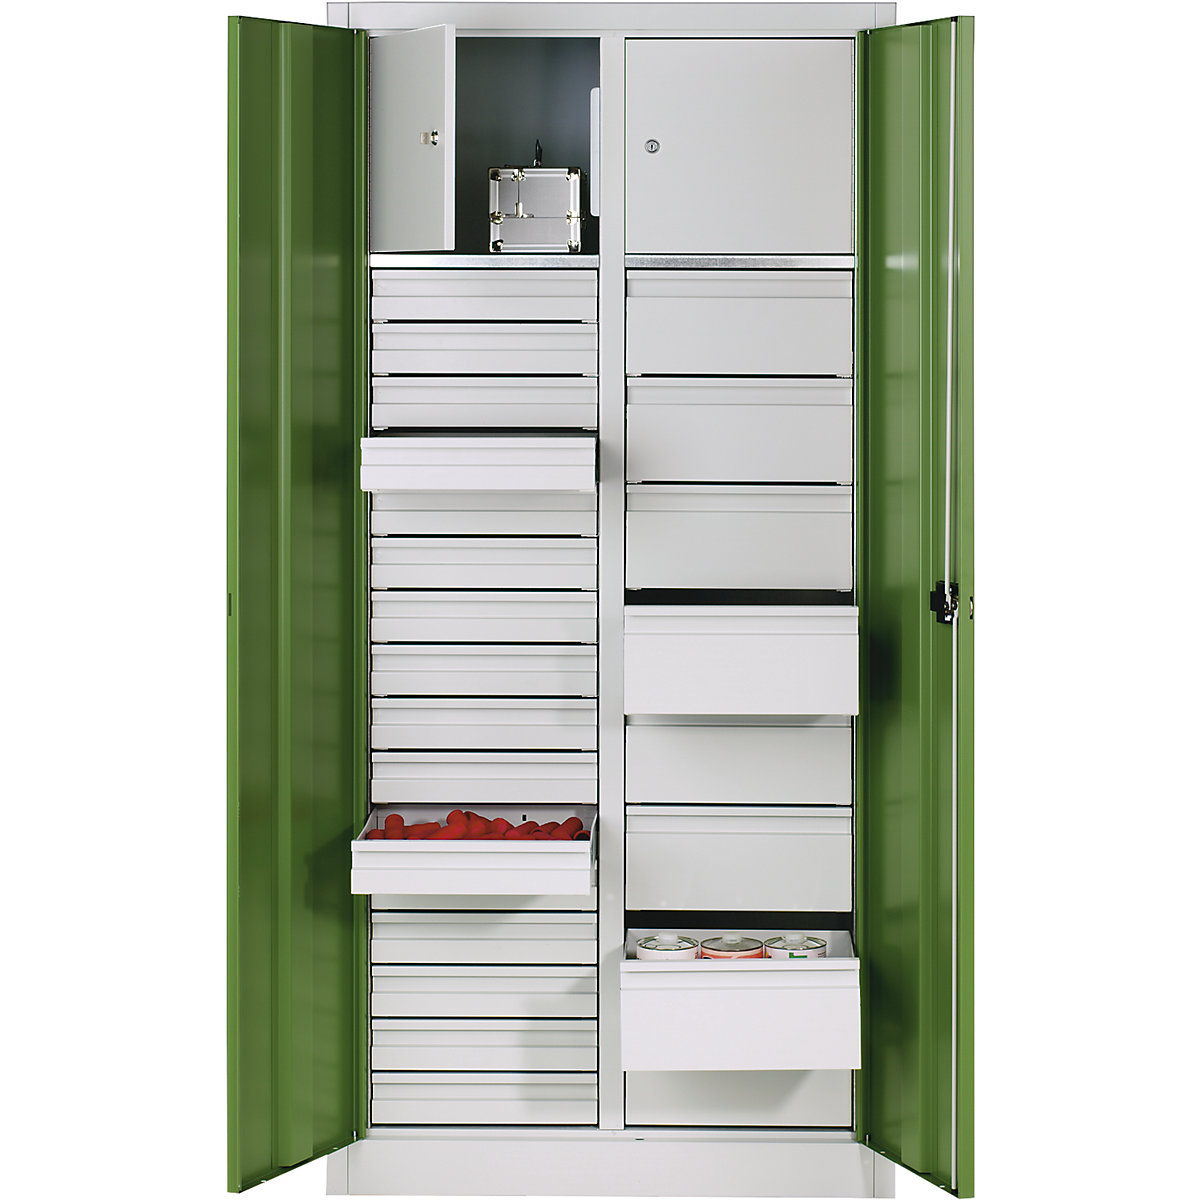 Storage cupboard made of sheet steel – C+P, 2 shelves, 24 drawers, 2 lockers, light grey/reseda green-1